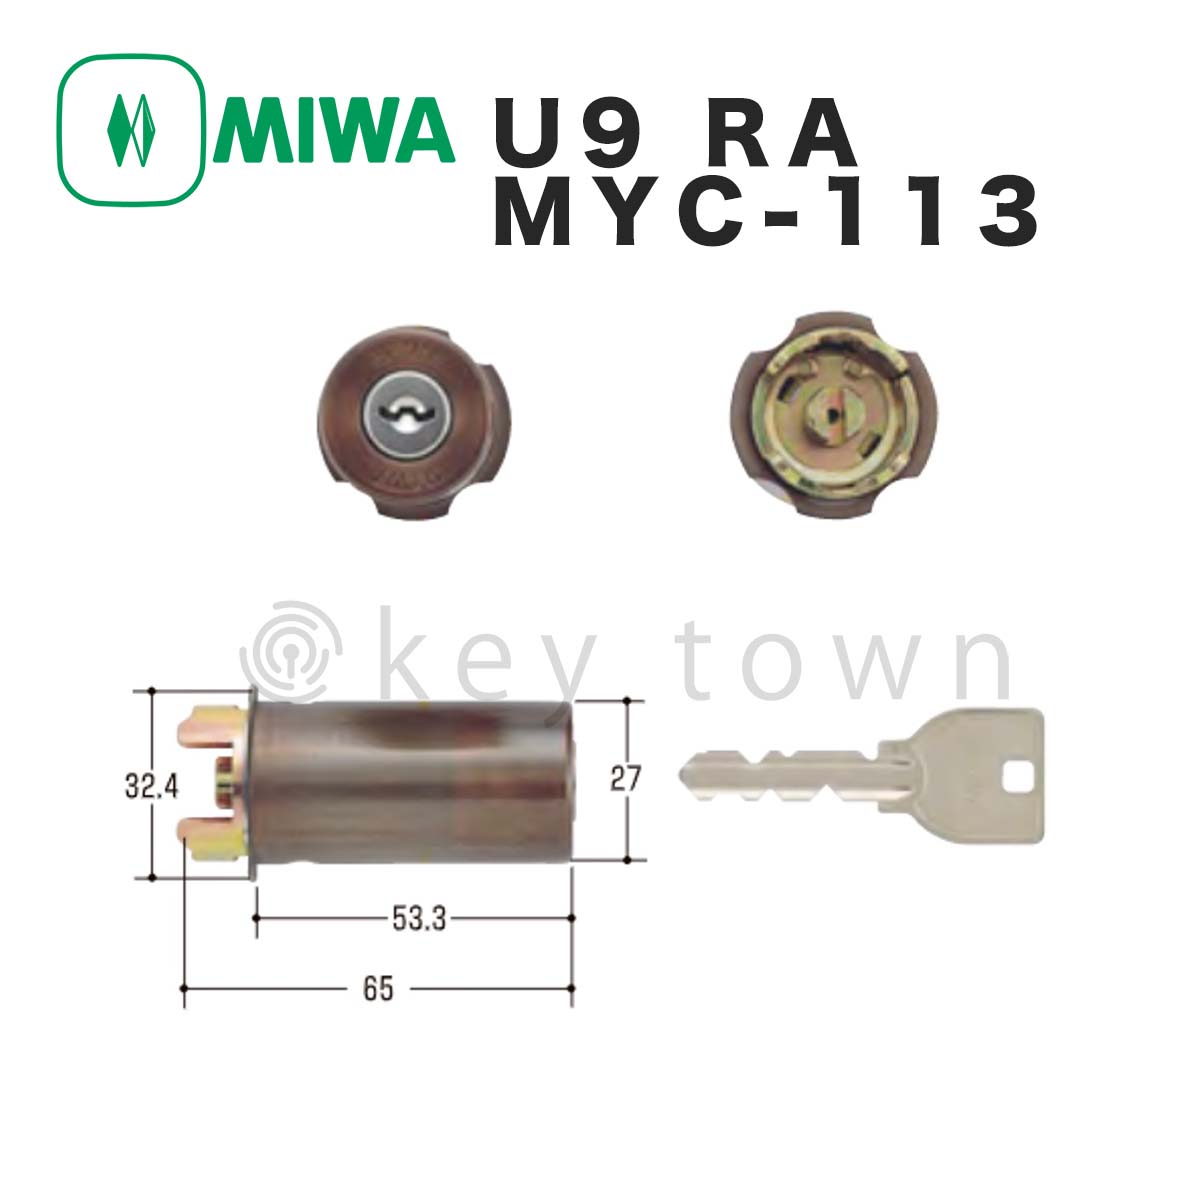 MIWA 【美和ロック】 U9 RA 85RA MCY-113 鍵 交換 取替えシリンダー ブロンズ色